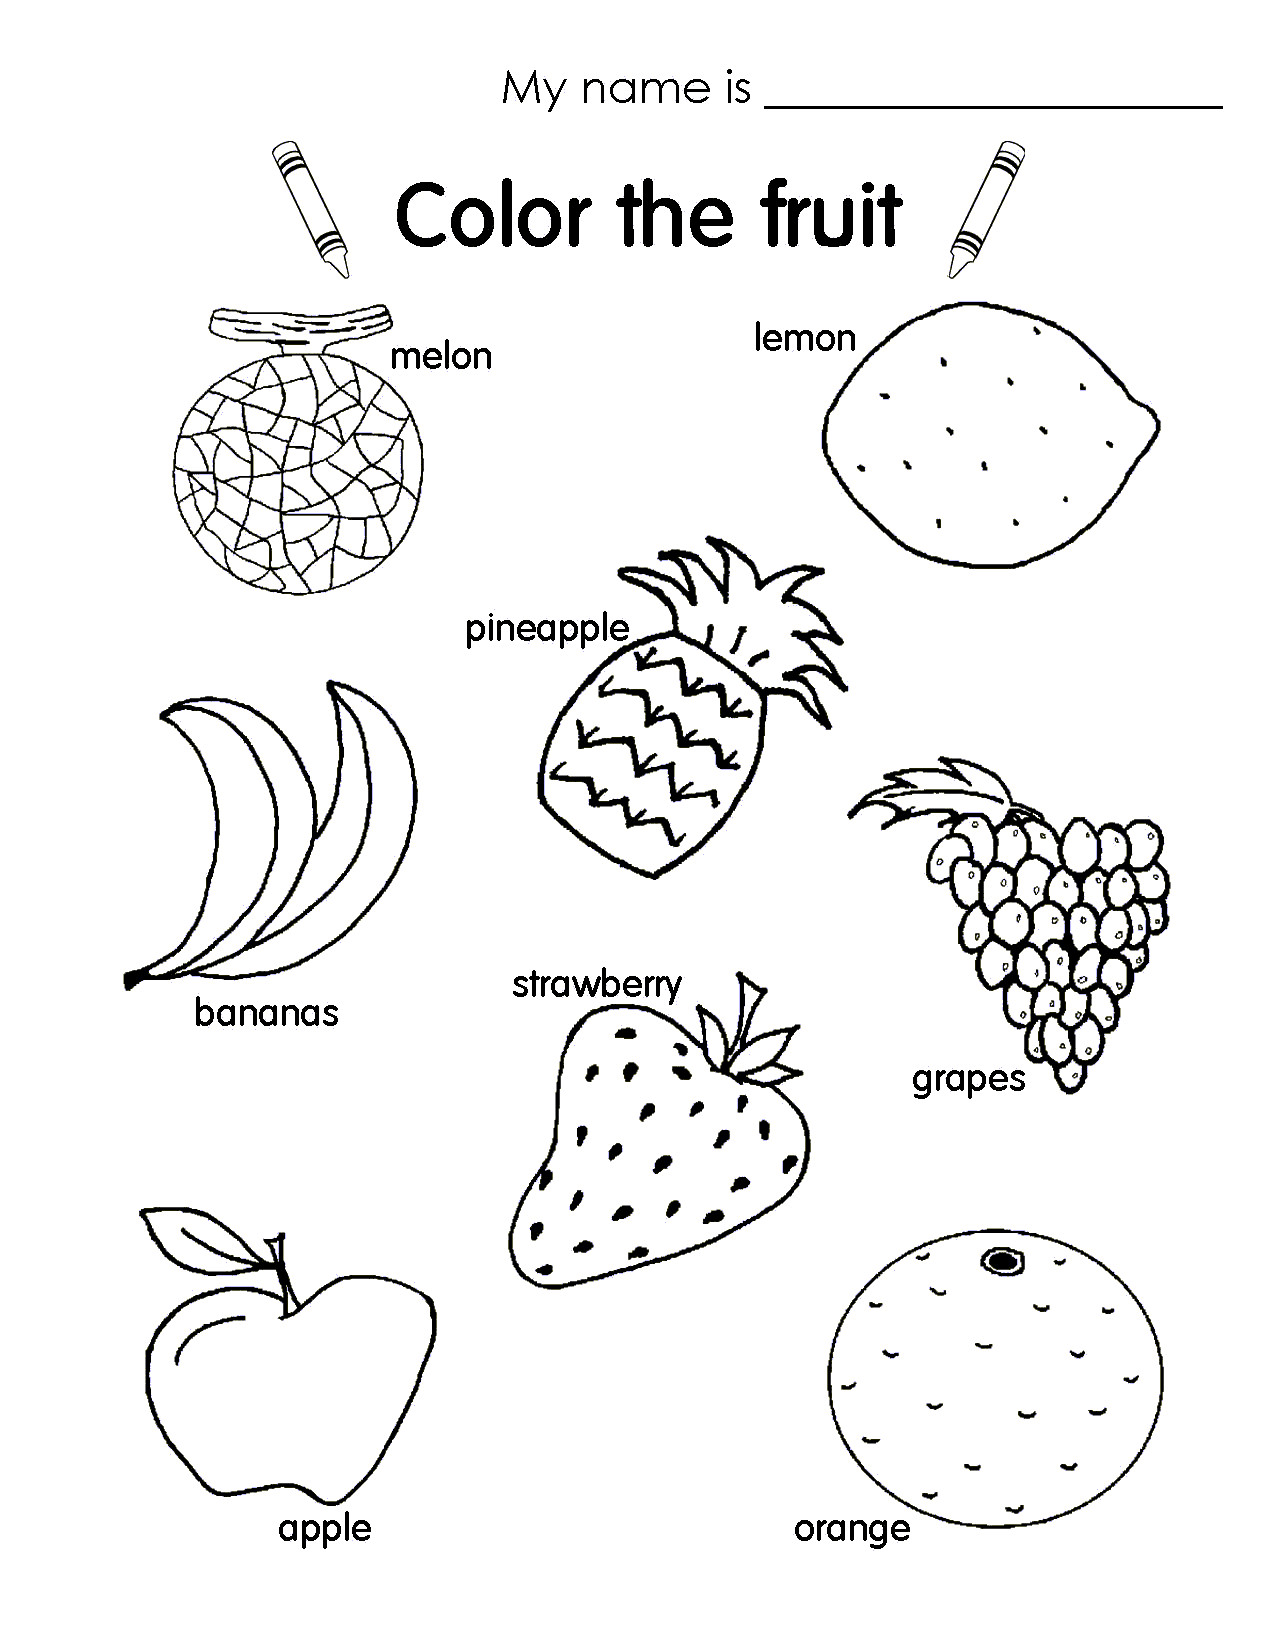 Coloring Book For Kids Fruits
 Pin by olive olarte on Kindergarten worksheets